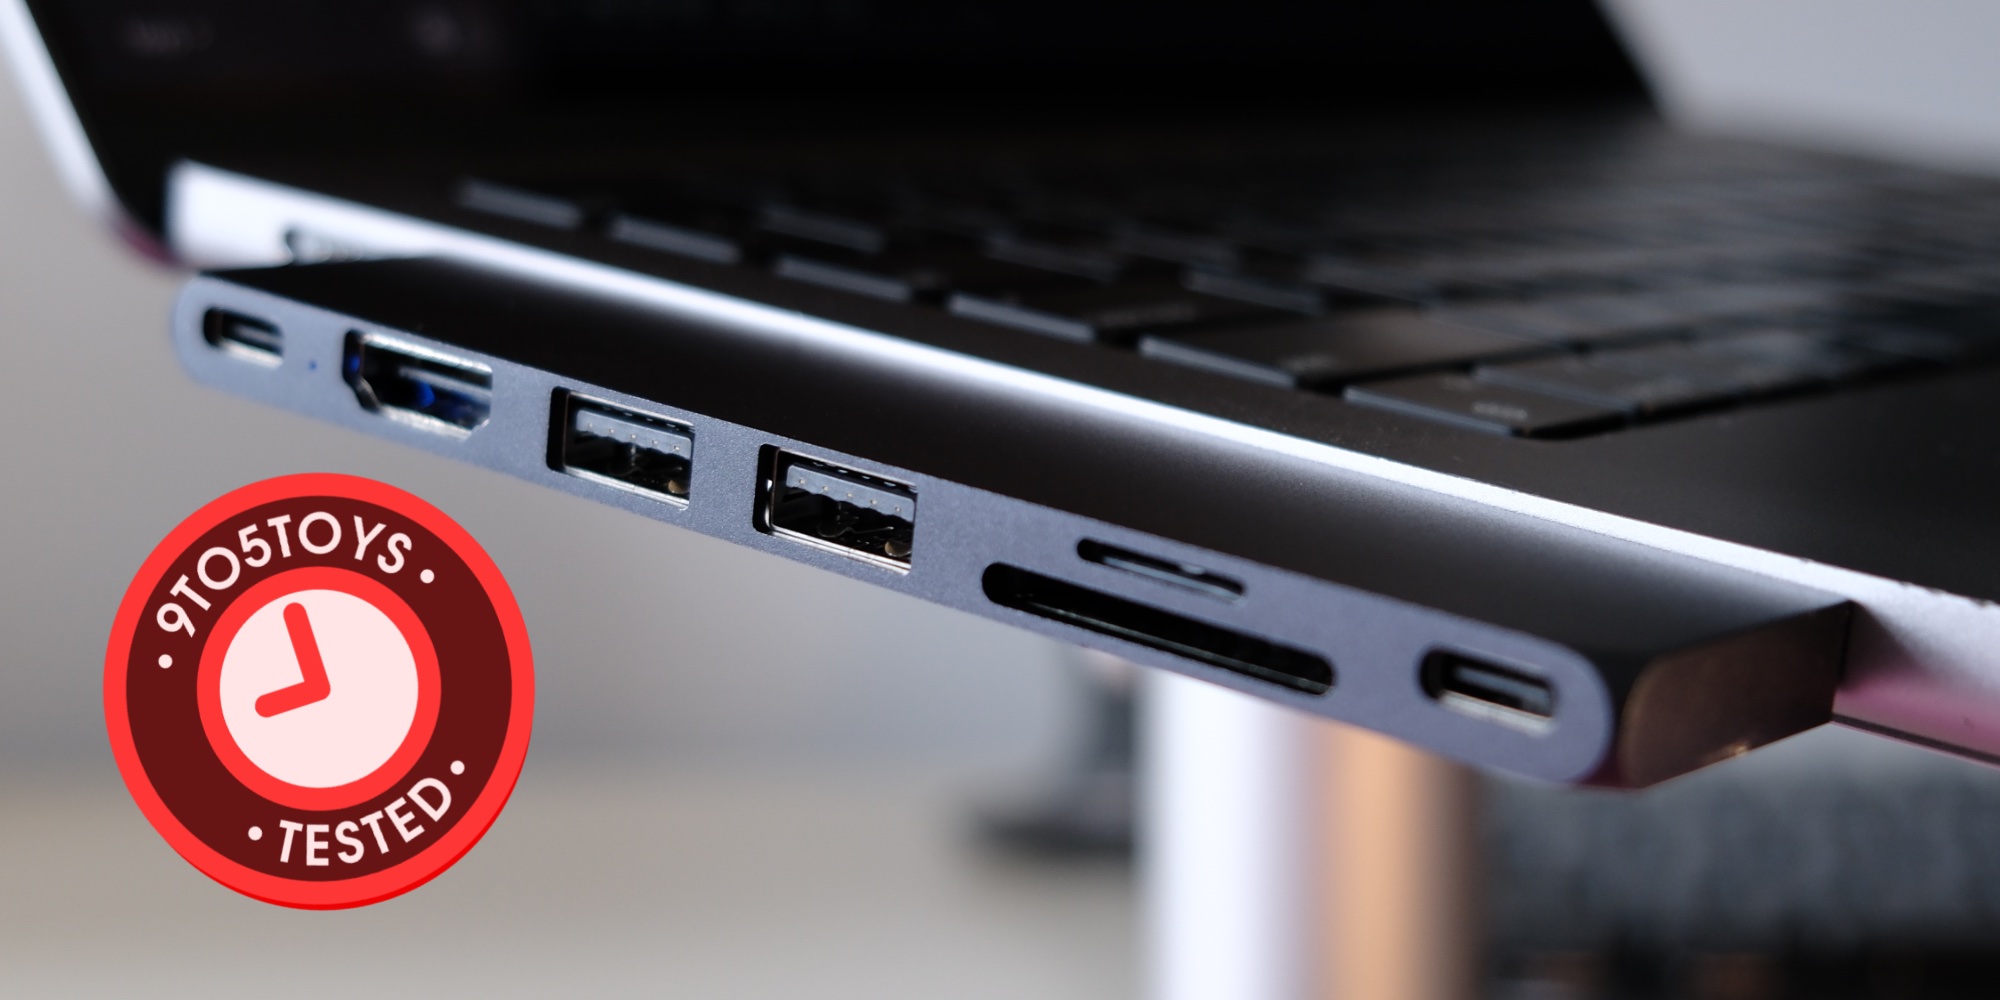 Satechi Aluminum Type-C Pro Hub Adapter for 2016 MacBook Pro 13” and 15 